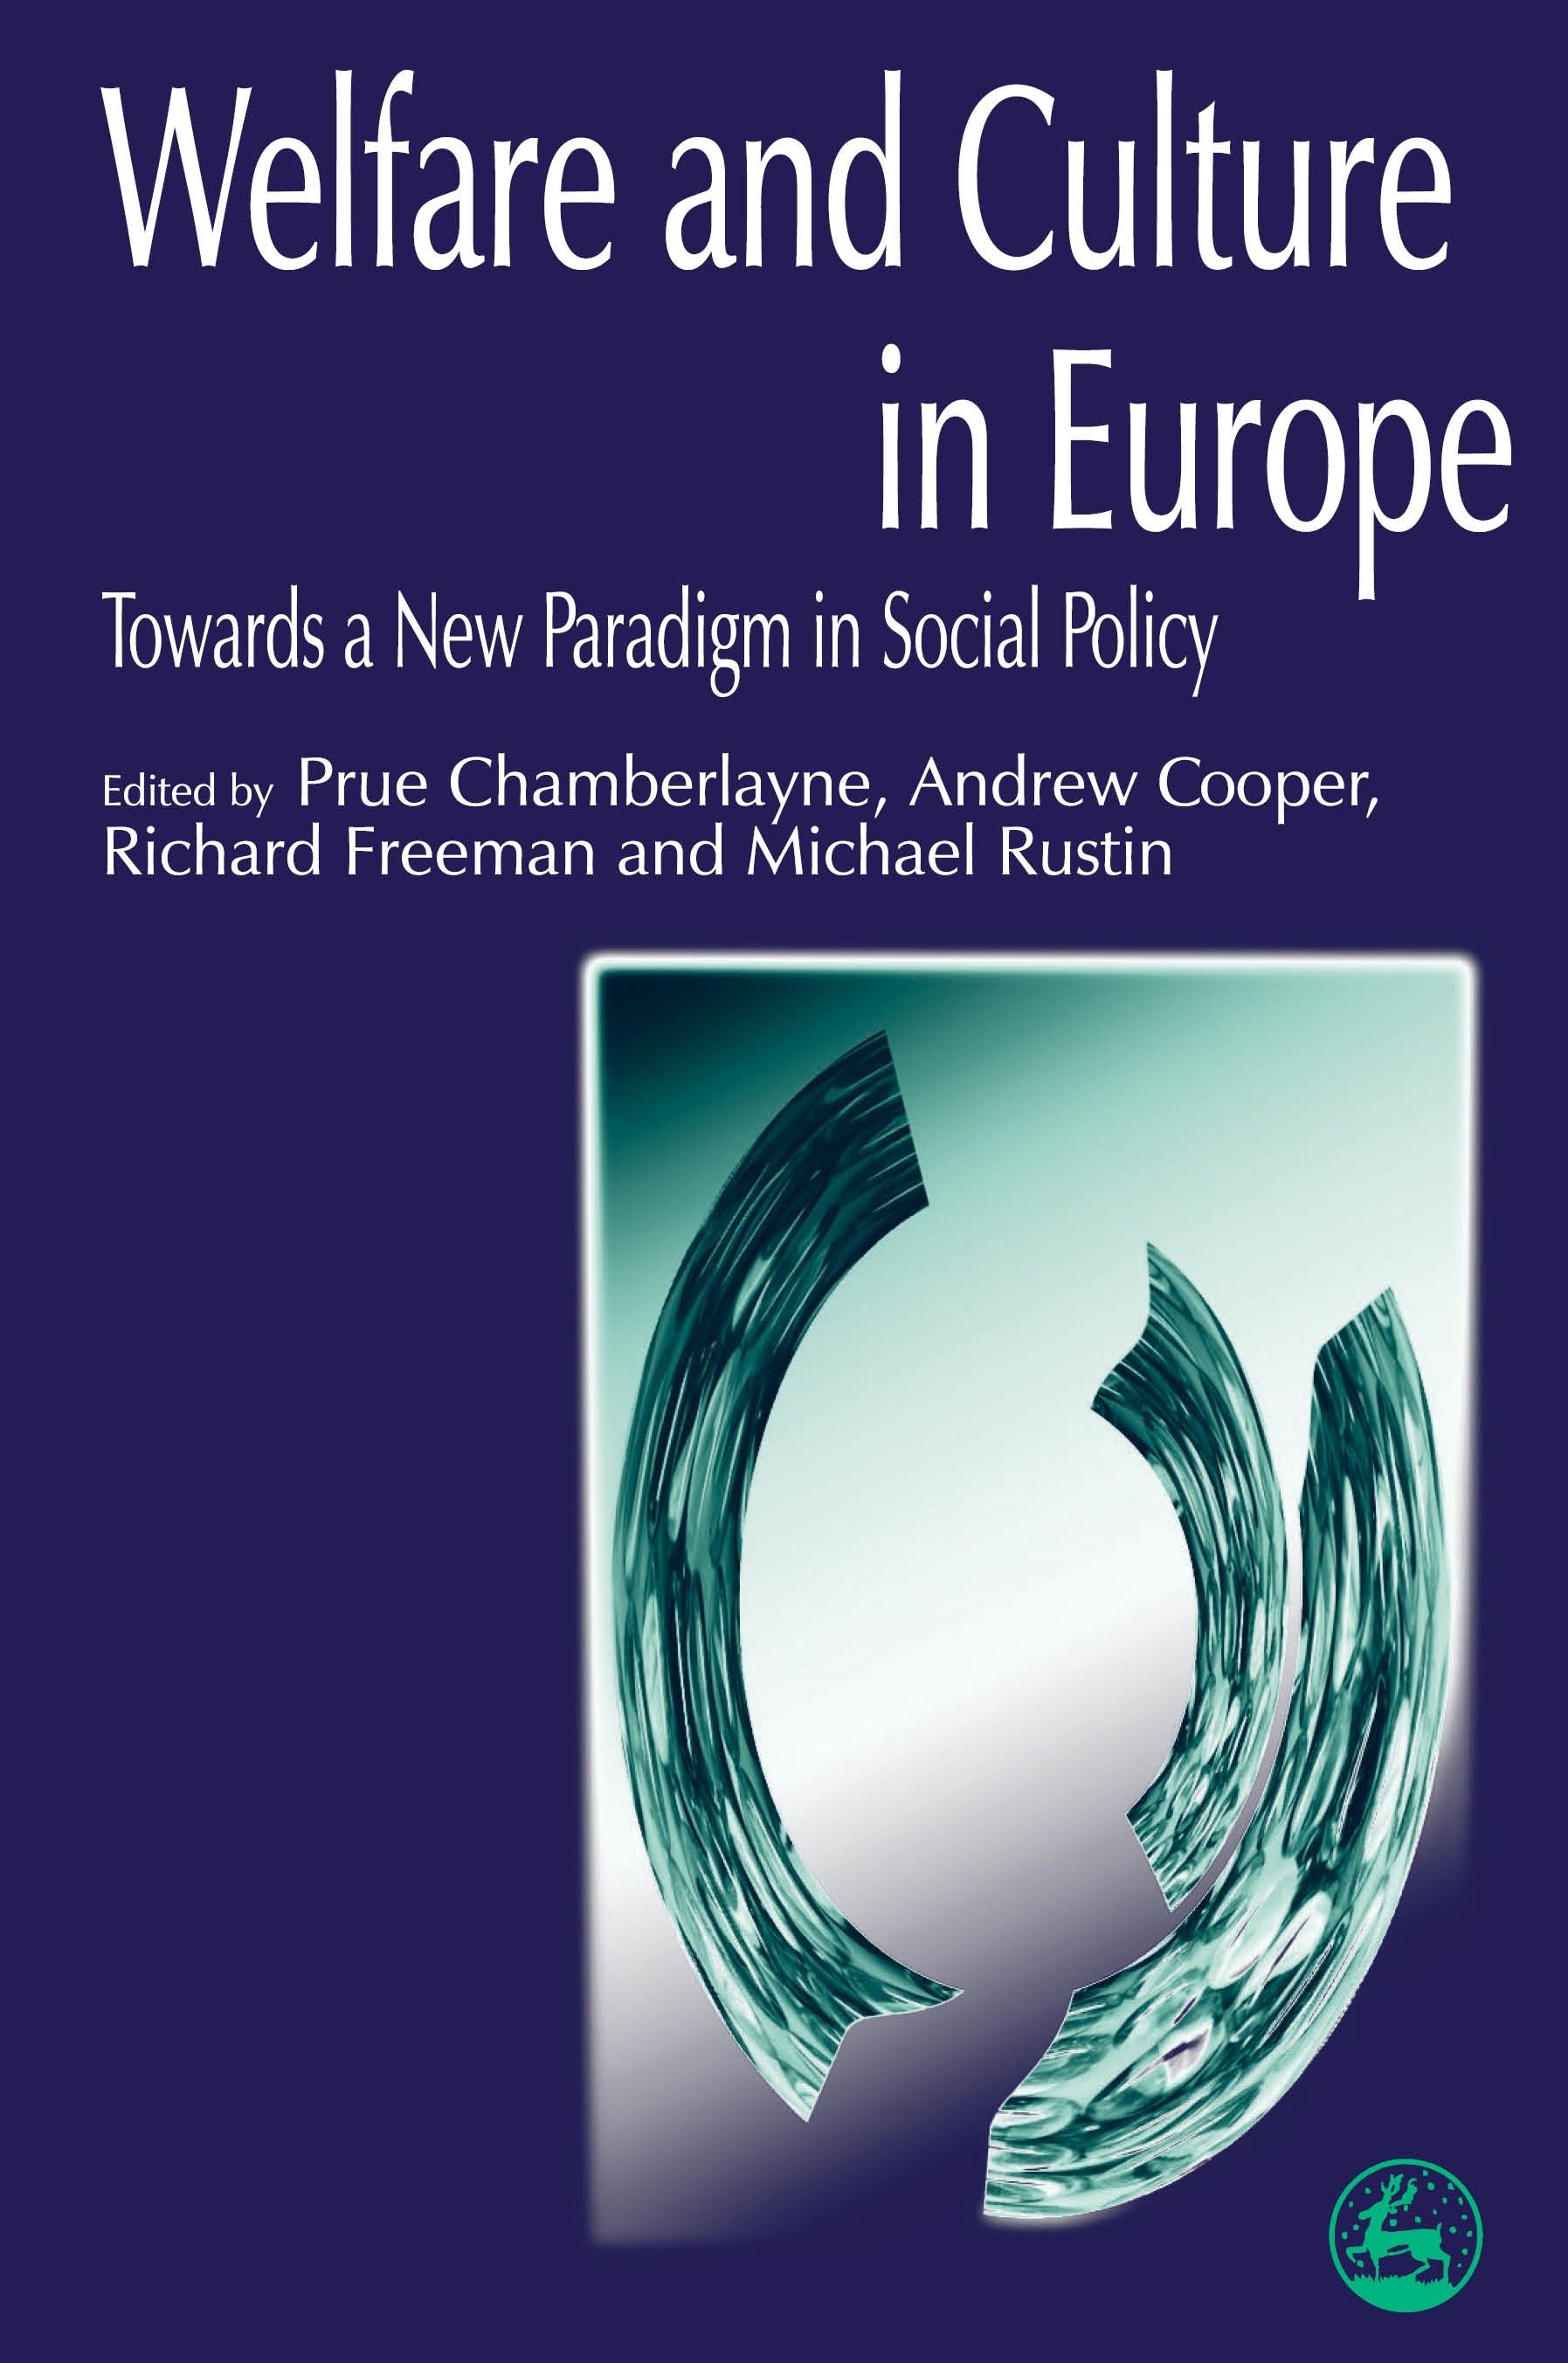 Welfare and Culture in Europe by Andrew Cooper, Prue Chamberlayne, Richard Freeman